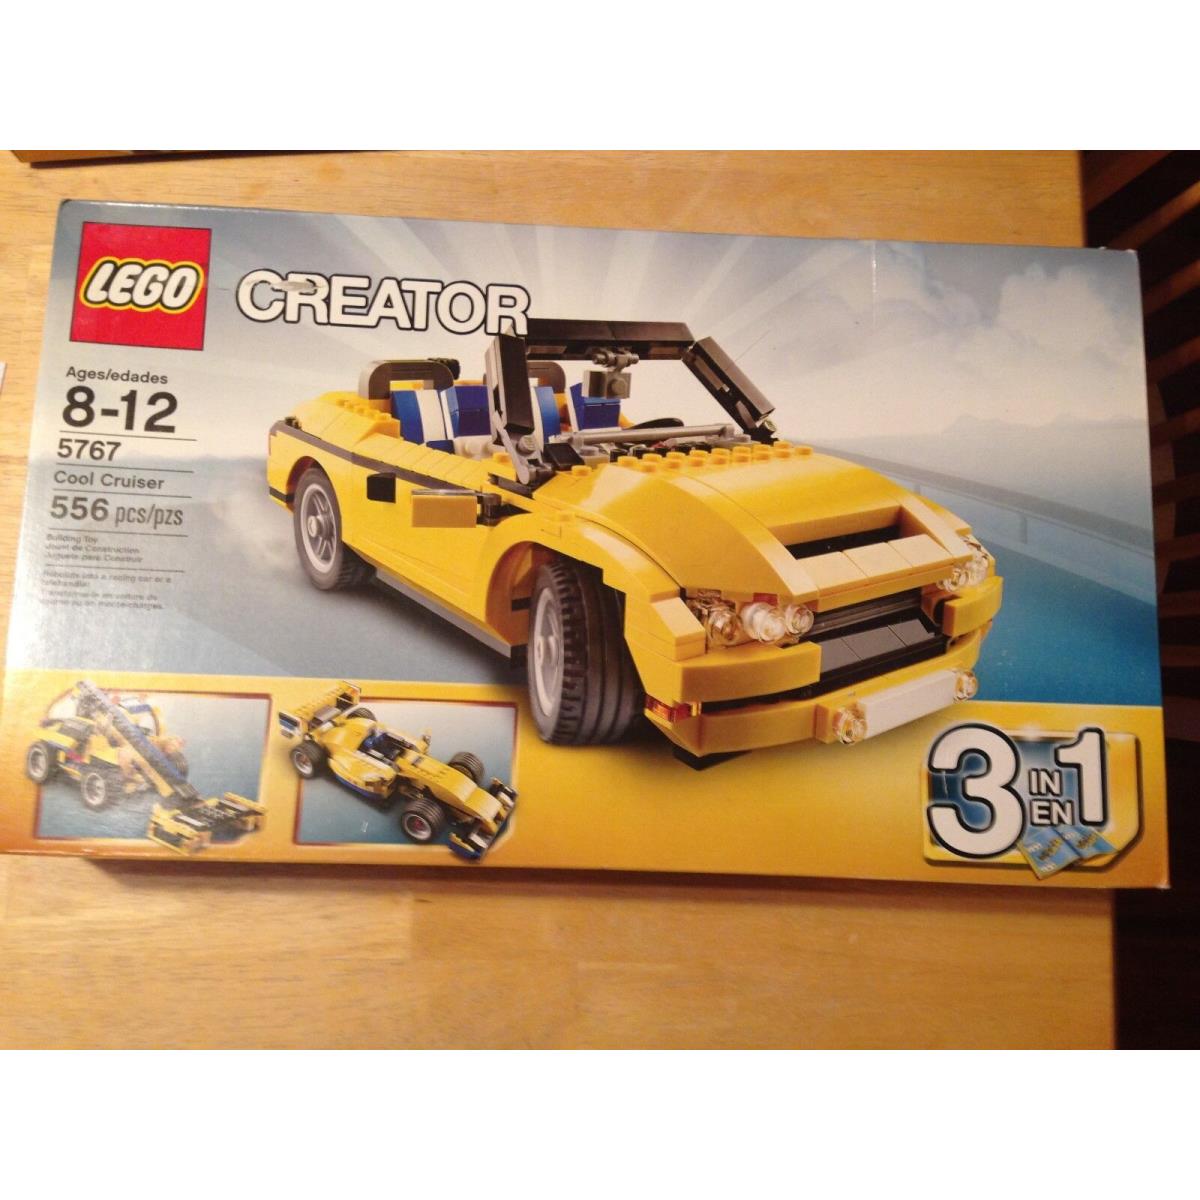 Lego Creator Cool Cruiser 5767 3 in 1 Building Set Legos